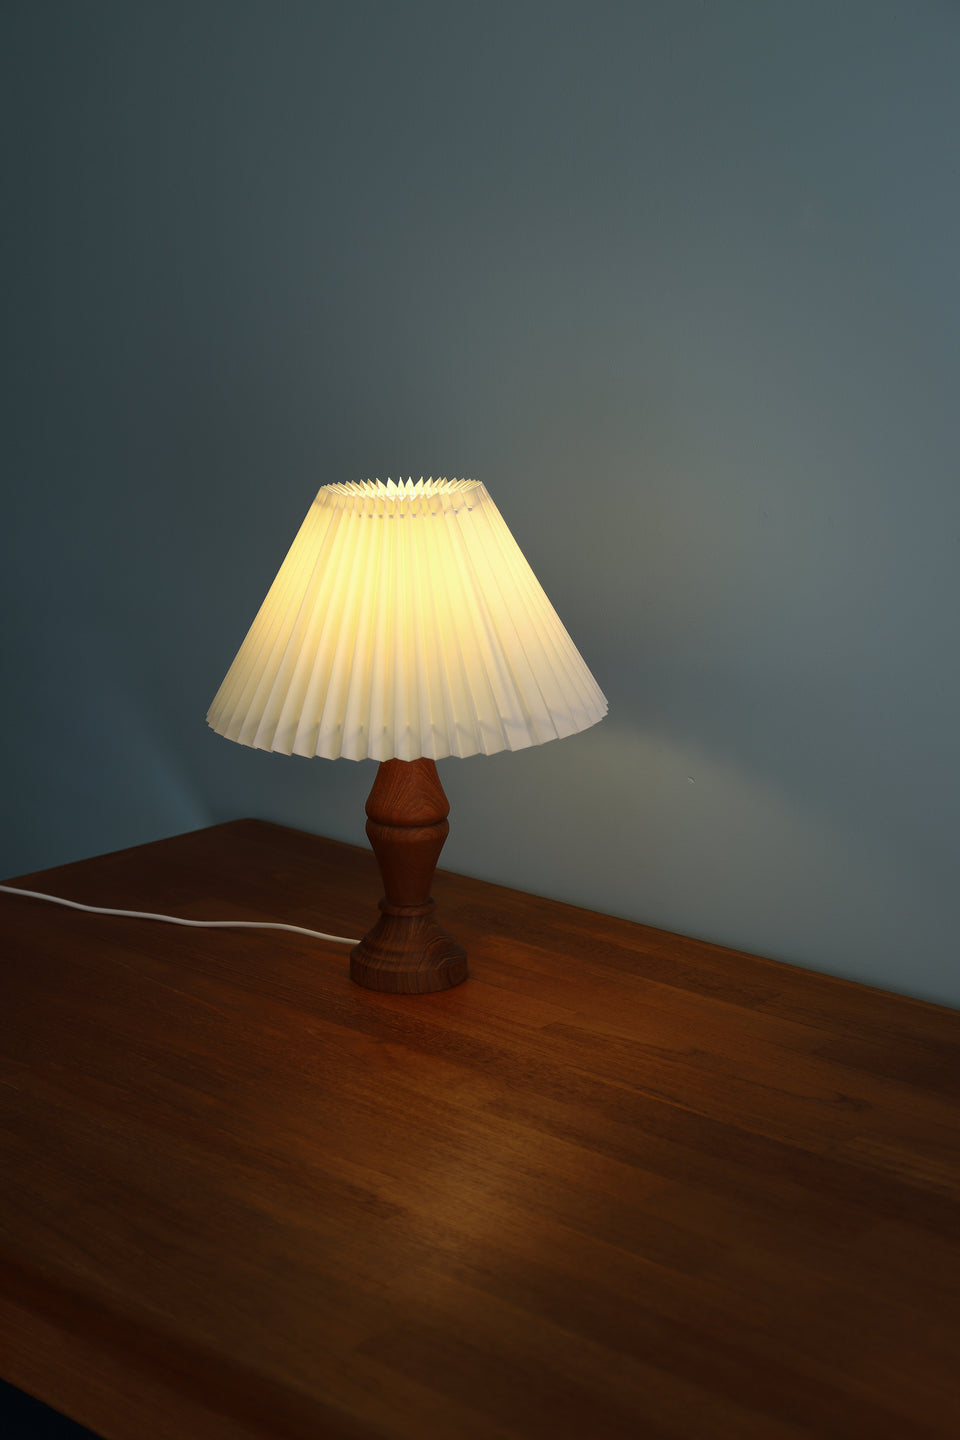 Teakwood Table Lamp Danish Vintage/デンマークヴィンテージ テーブルランプ 間接照明 チーク材 北欧インテリア